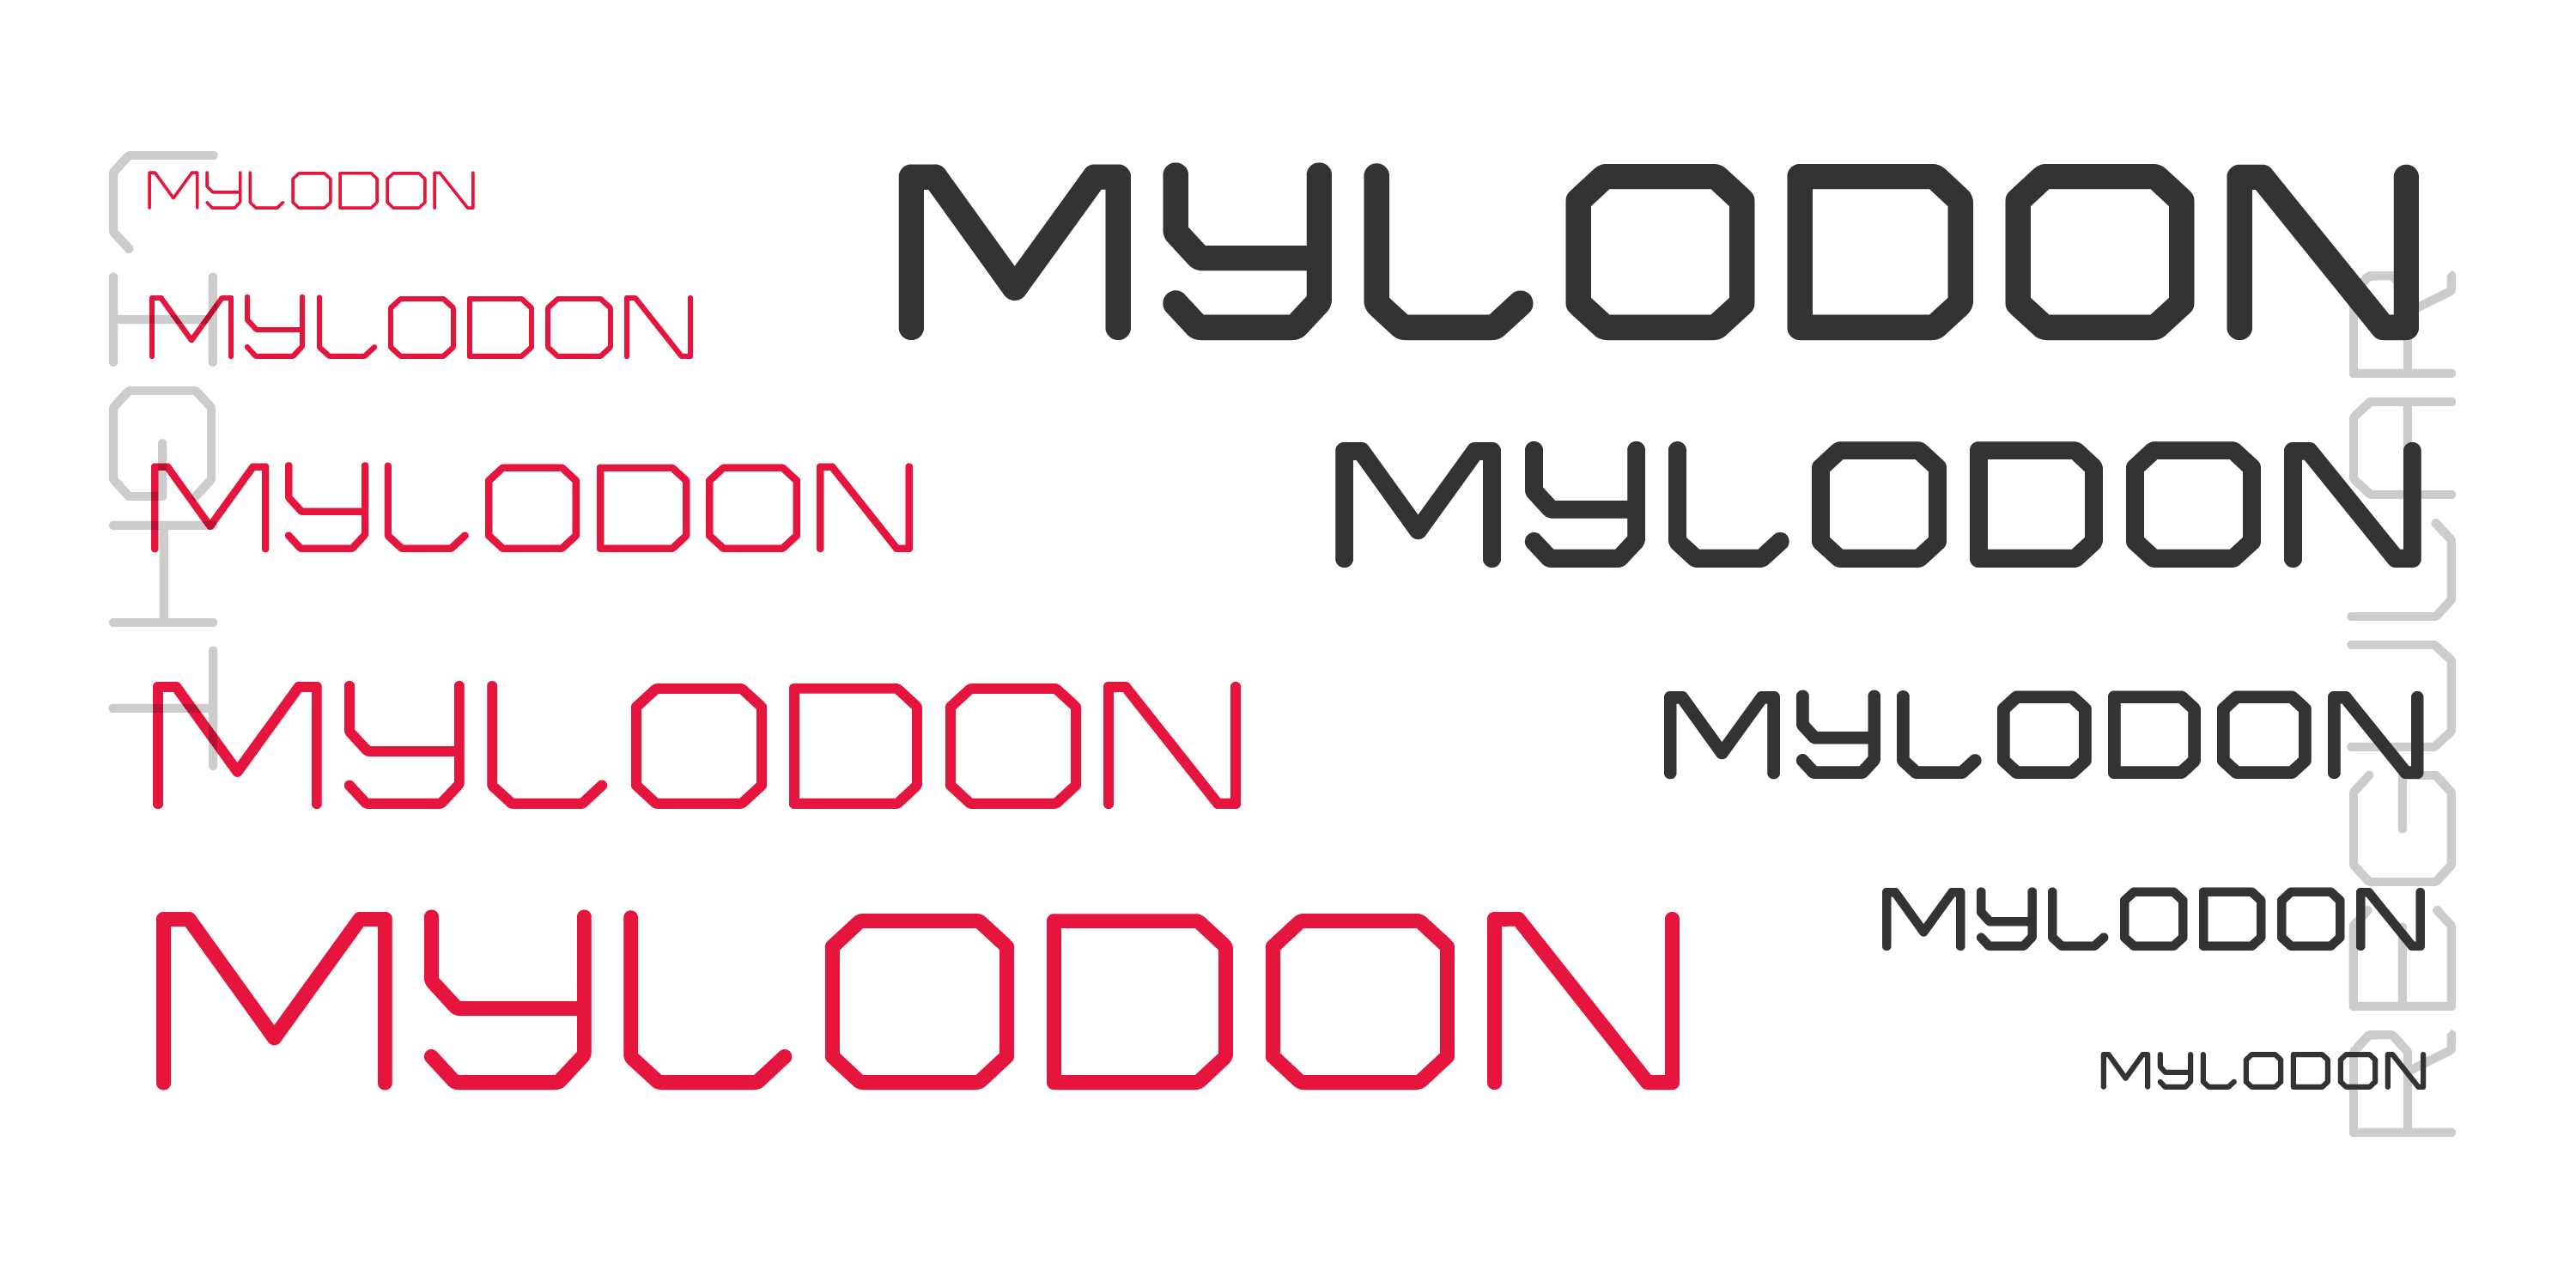 Mylodon font family - 3